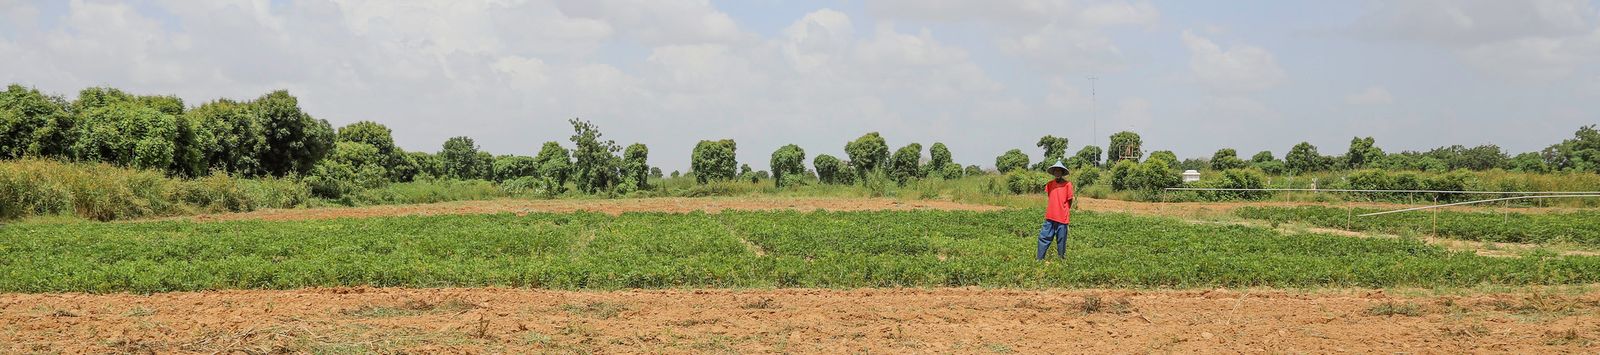 Ground nut farmer, beneficiary of the ABEE project, in a trial plot in Sibassor - Kaolack Region, Senegal - October 2020 © J. G. Mandabrandja, DeCOM/CORAF 